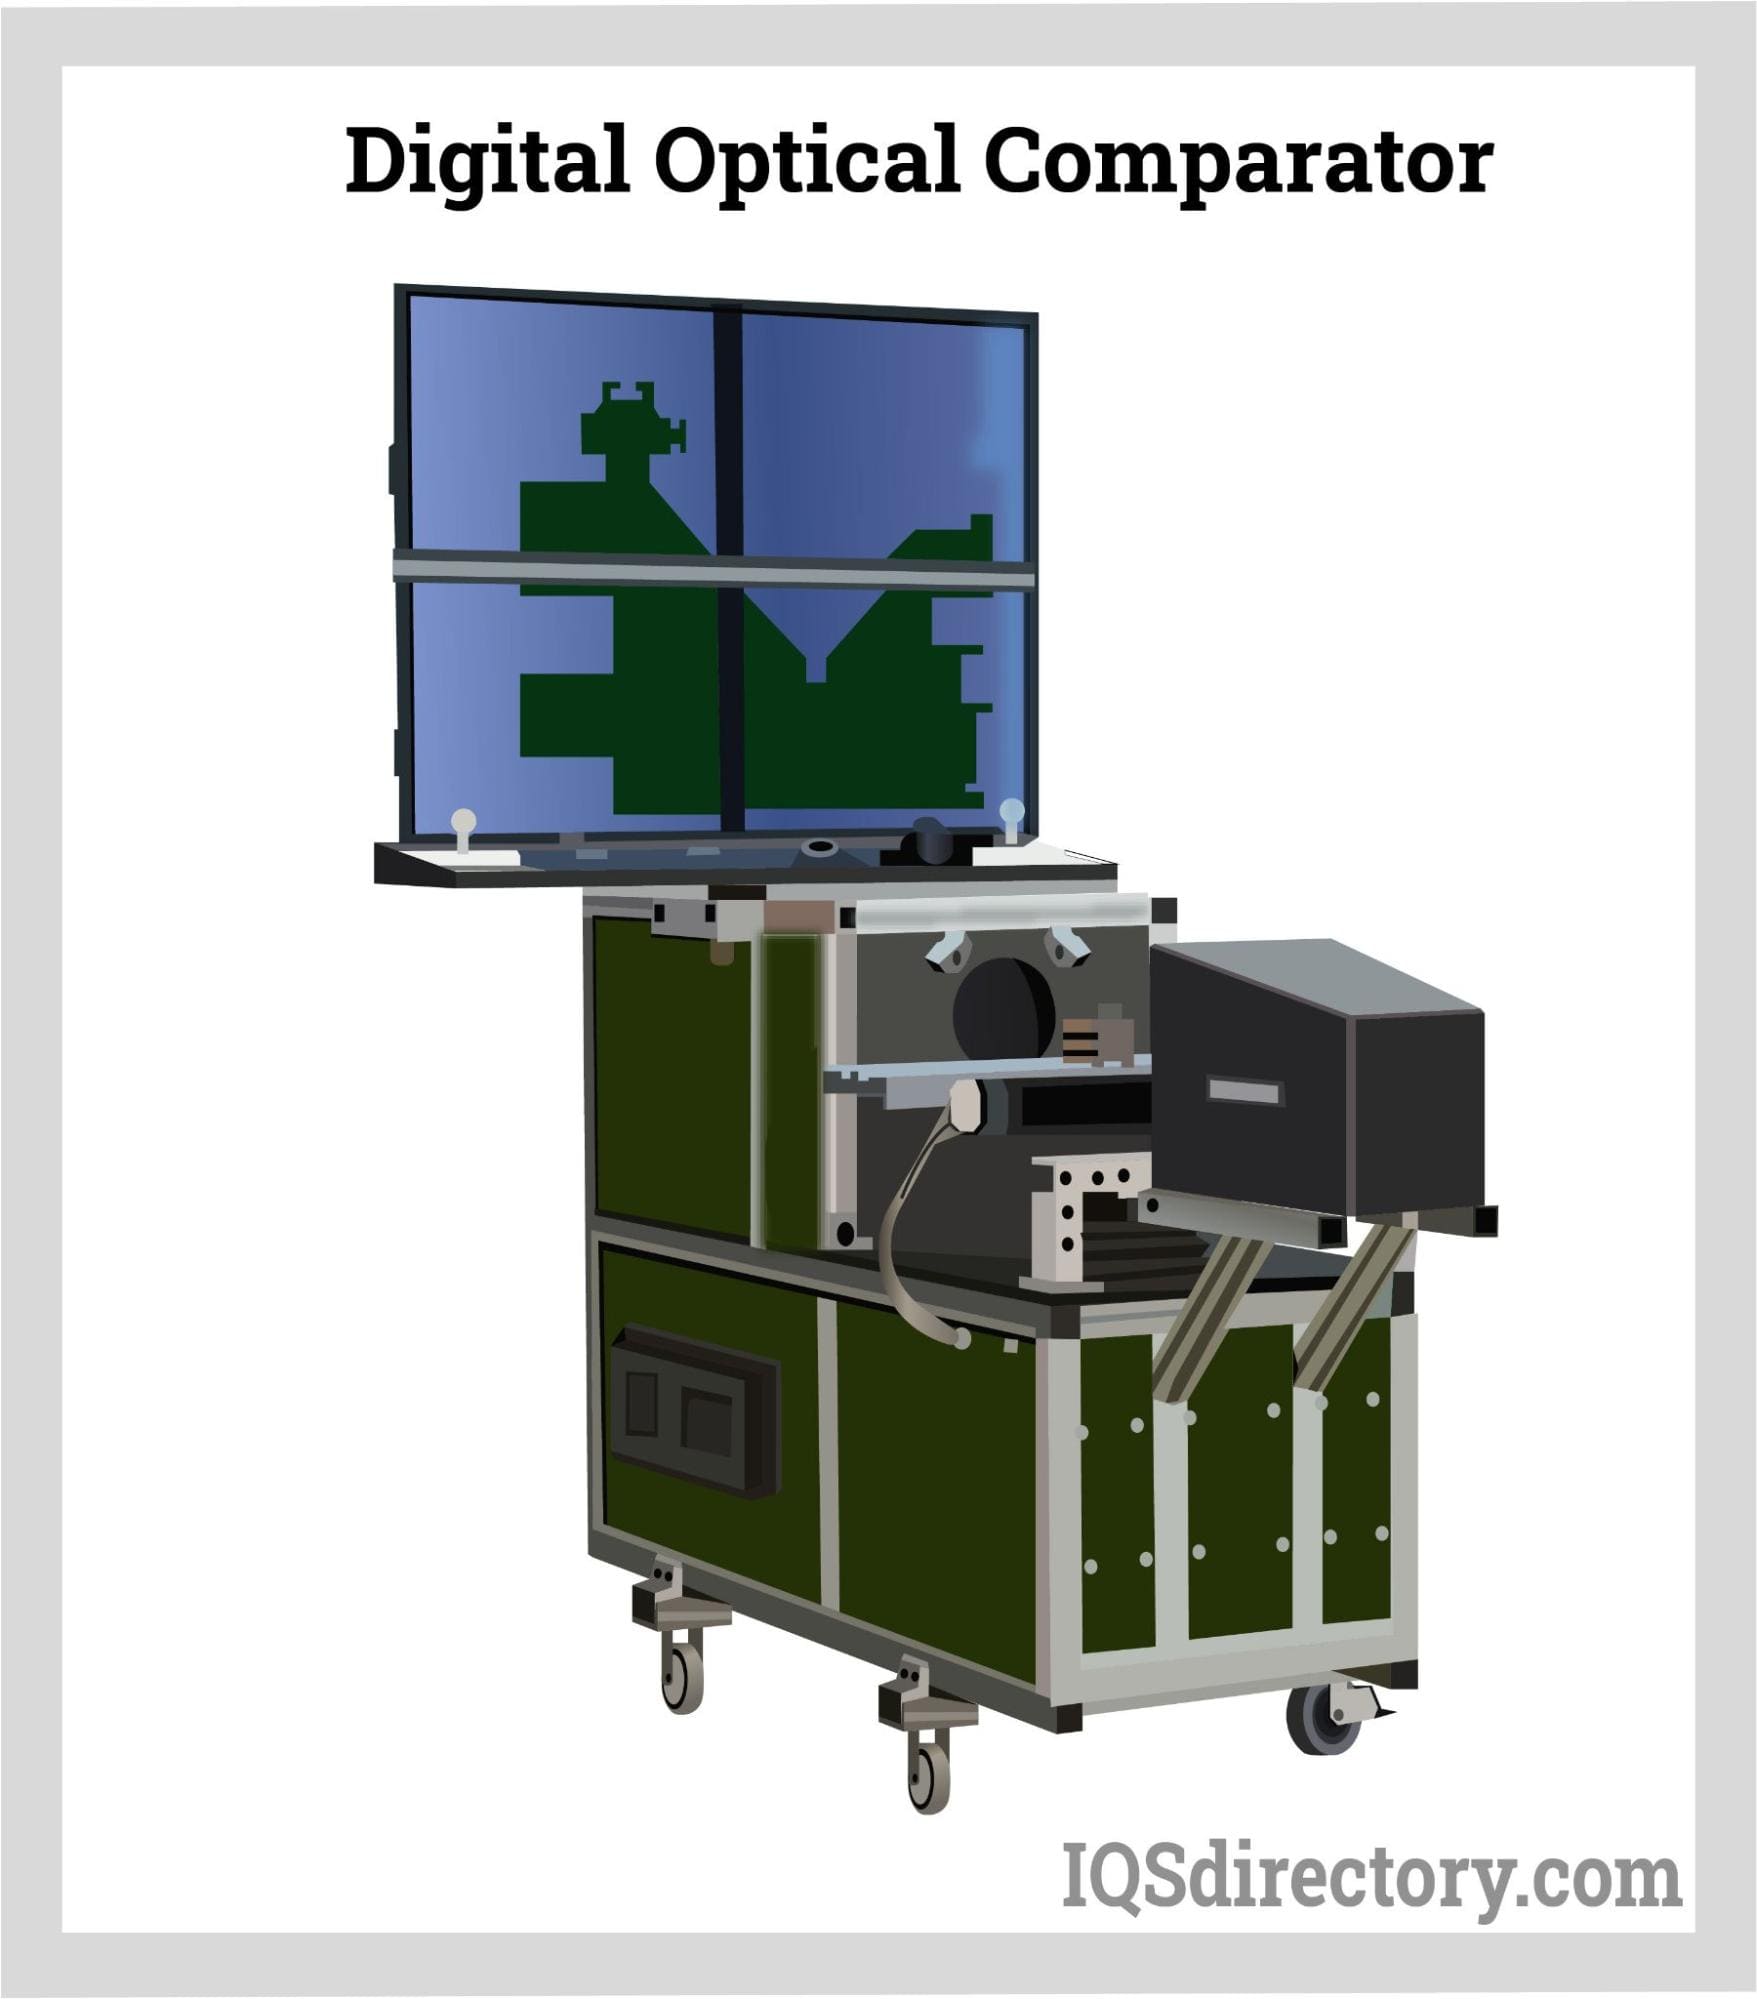 Digital Optical Comparator